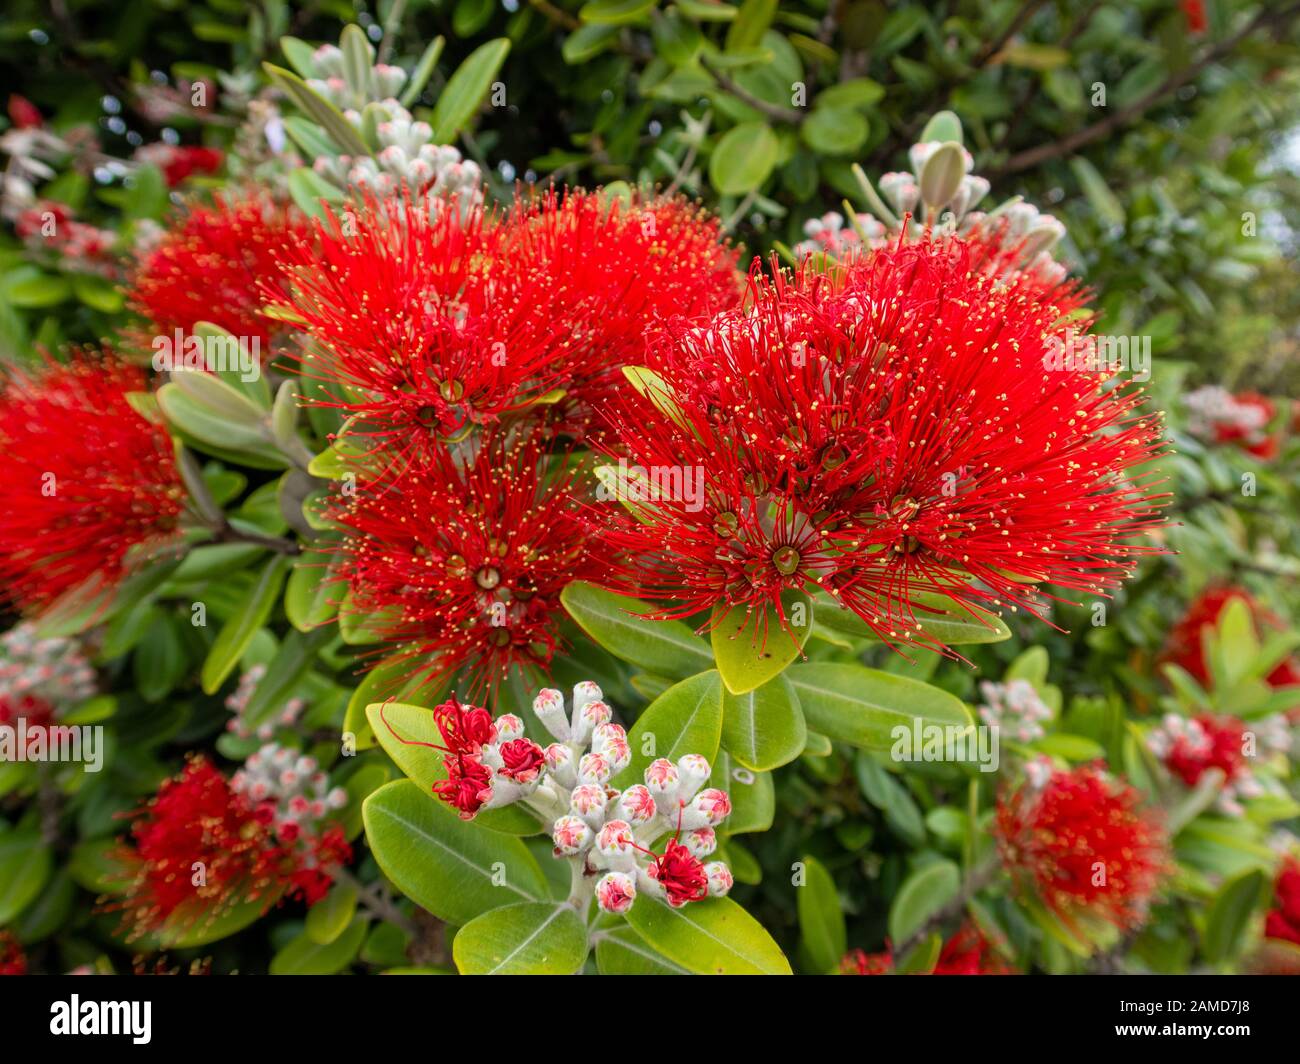 Red, vibrant pohutakawa buds and flowers blooming in the summertime around coastal Kaikoura, New Zealand Stock Photo